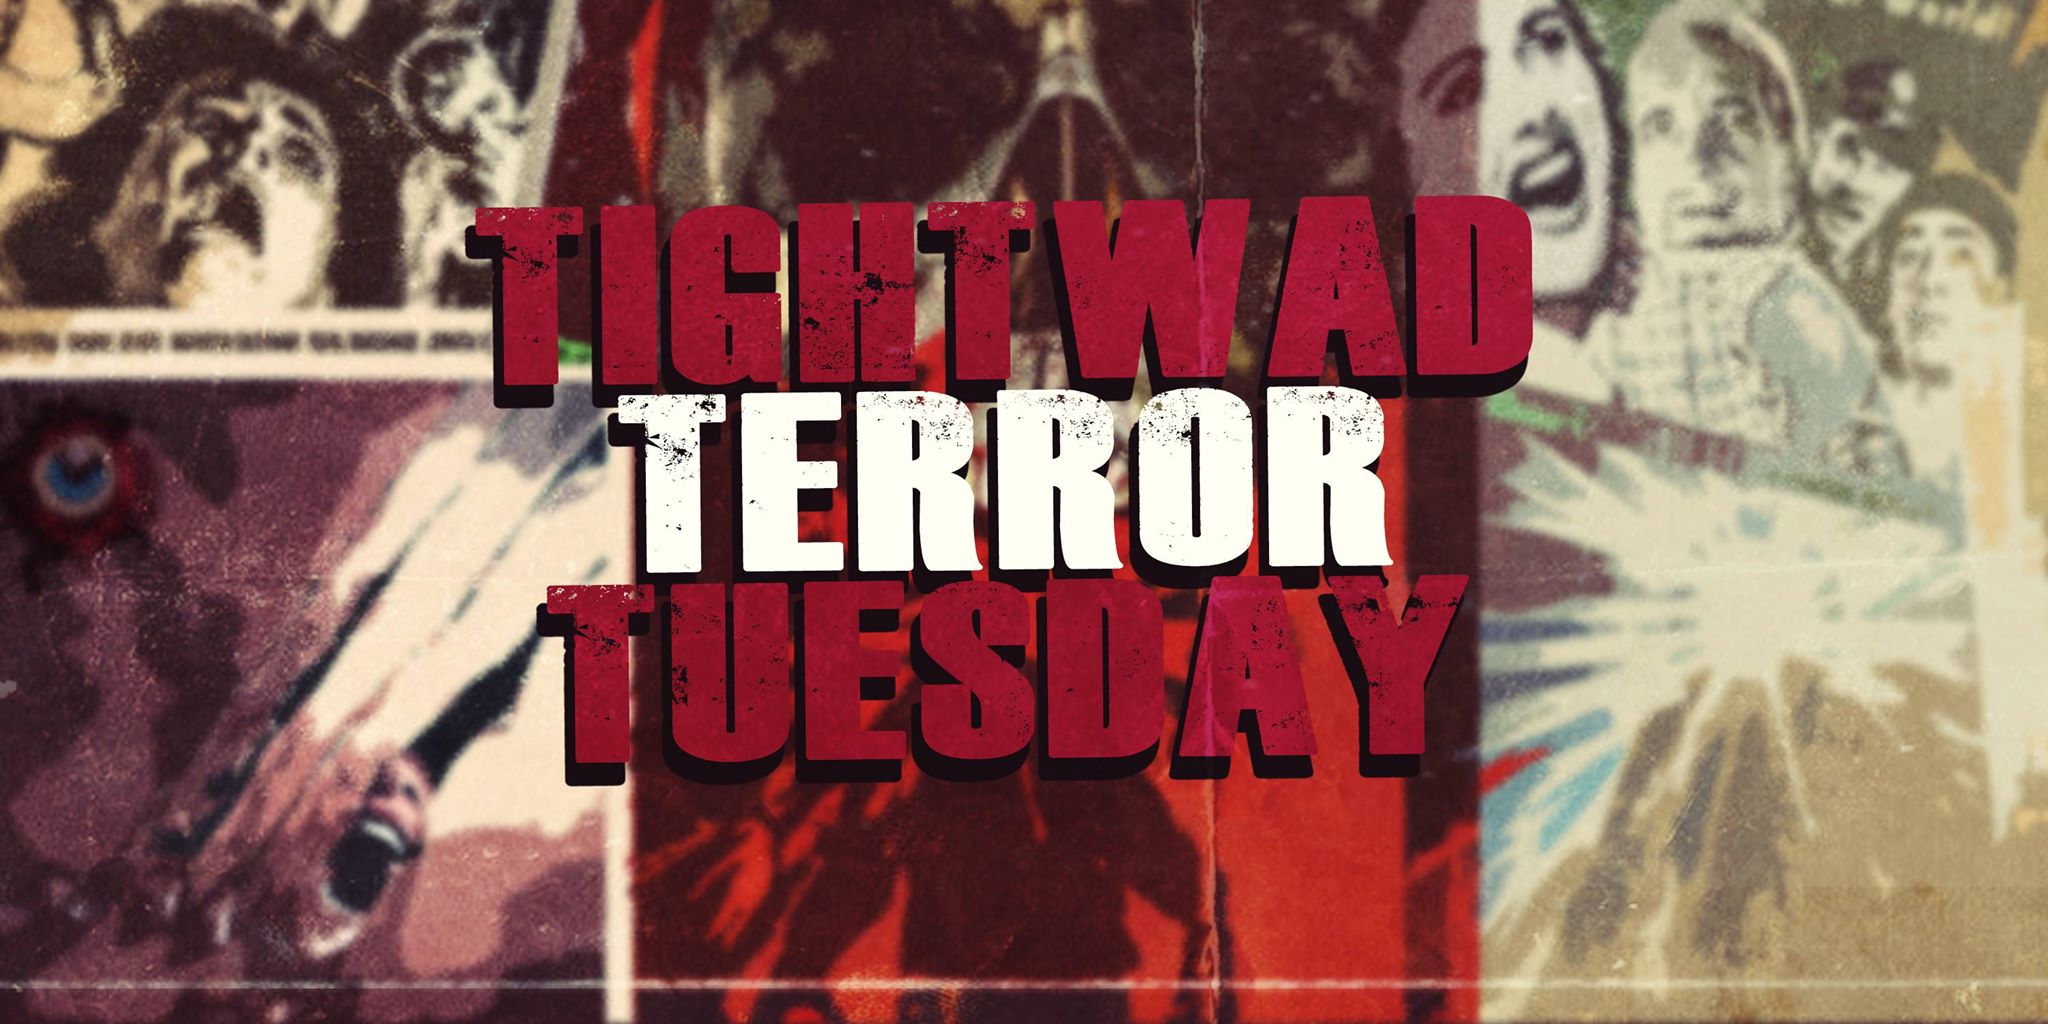 Talata Tightwad Terror – Sarimihetsika maimaim-poana